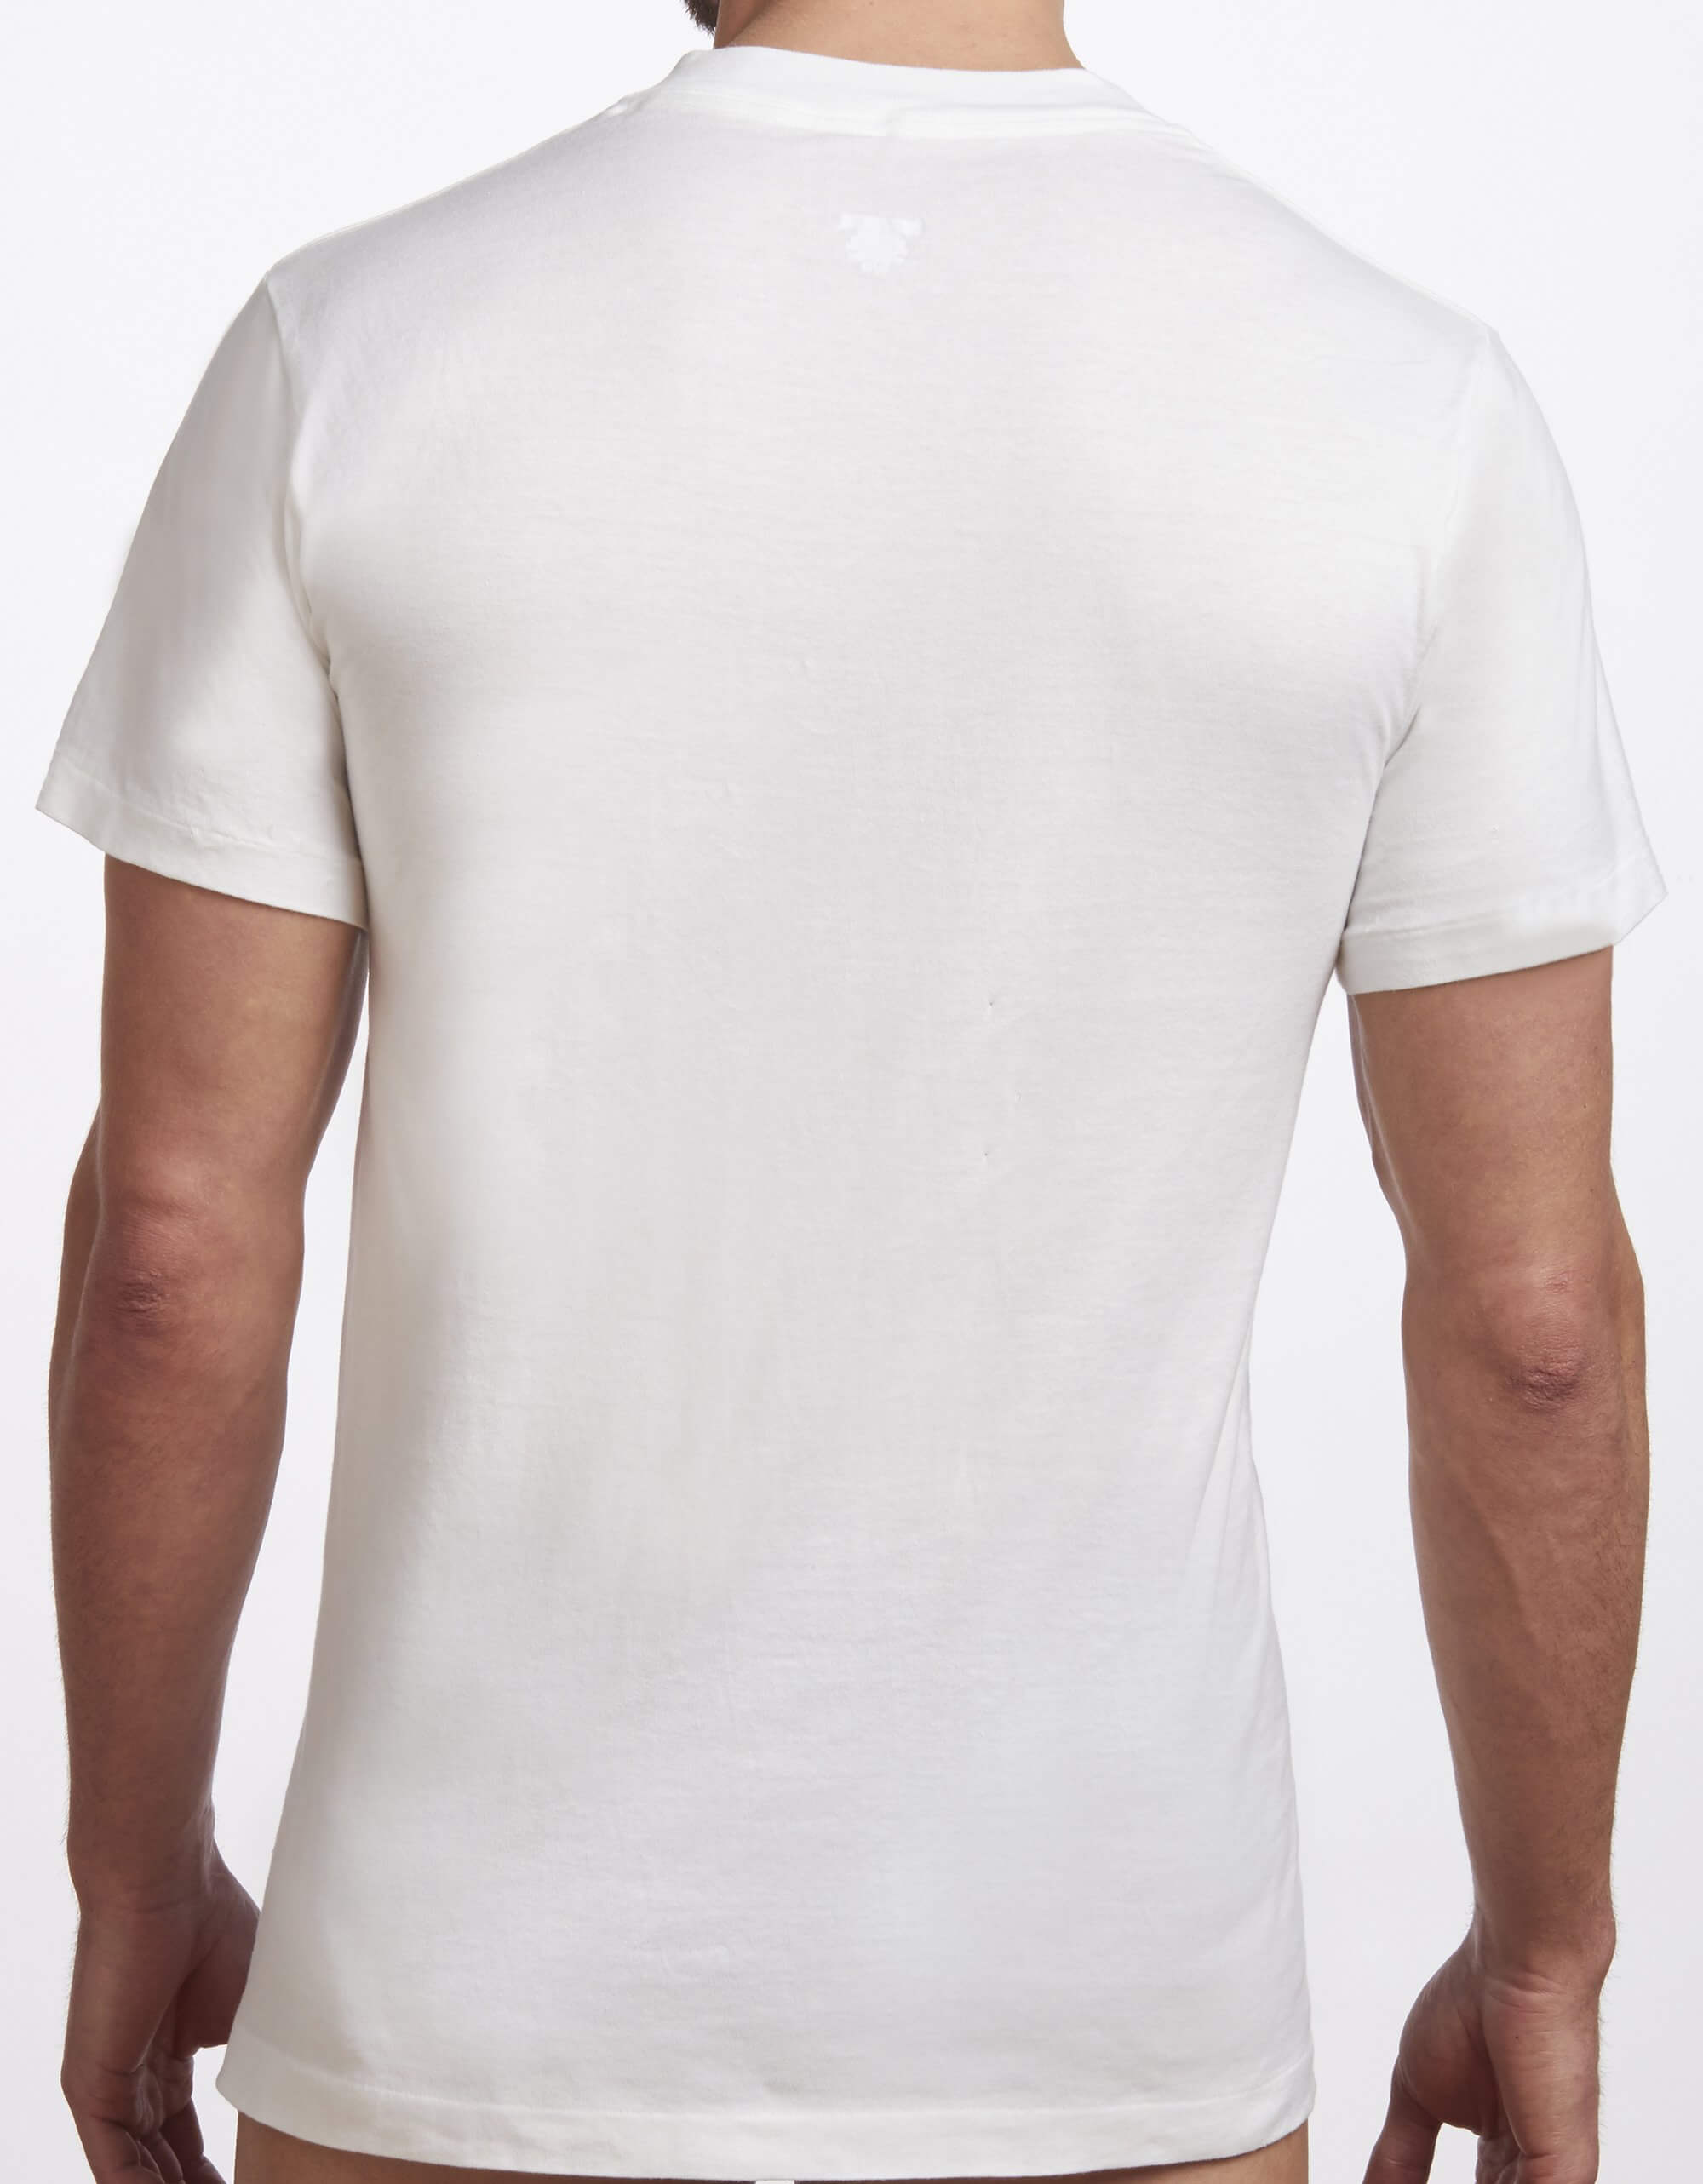 Men's Premium Cotton V-neck T-Shirt - 2 pack